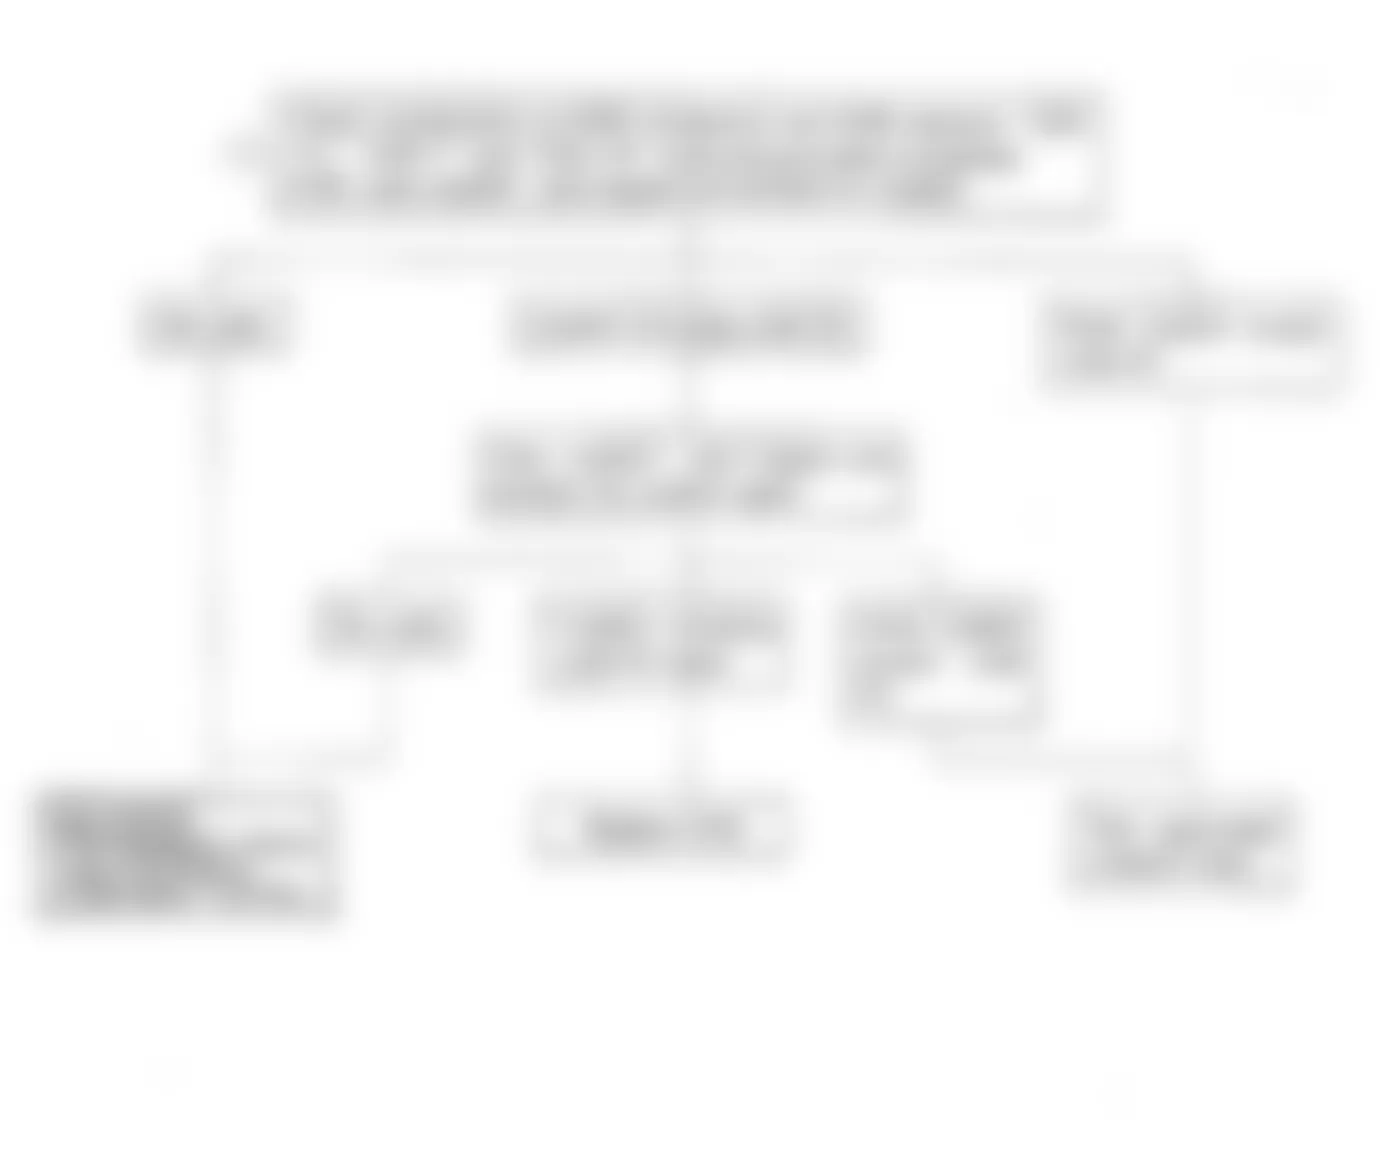 Isuzu Pickup LS 1991 - Component Locations -  Code No. 52 Flow Chart, Faulty ECM Ram